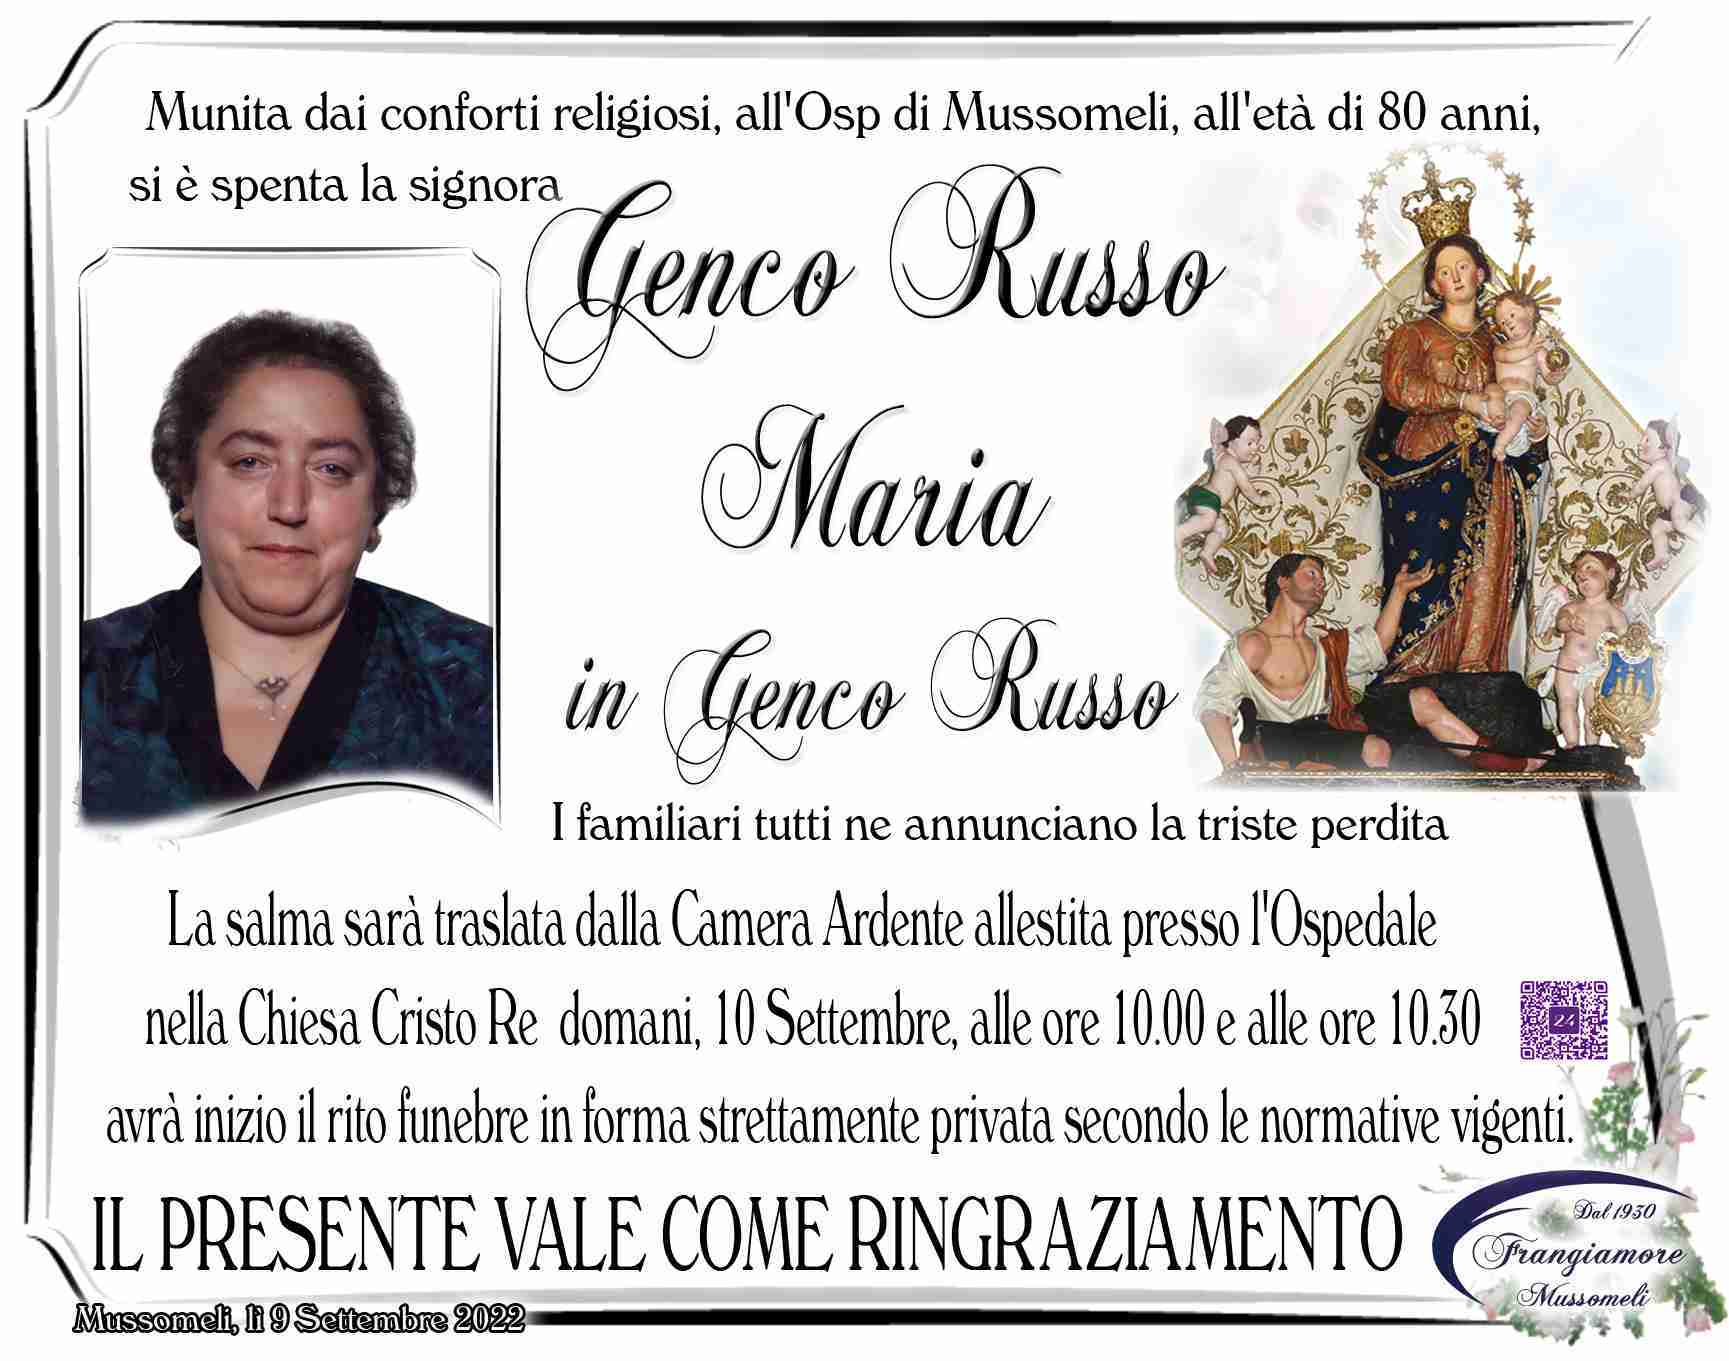 Maria Genco Russo